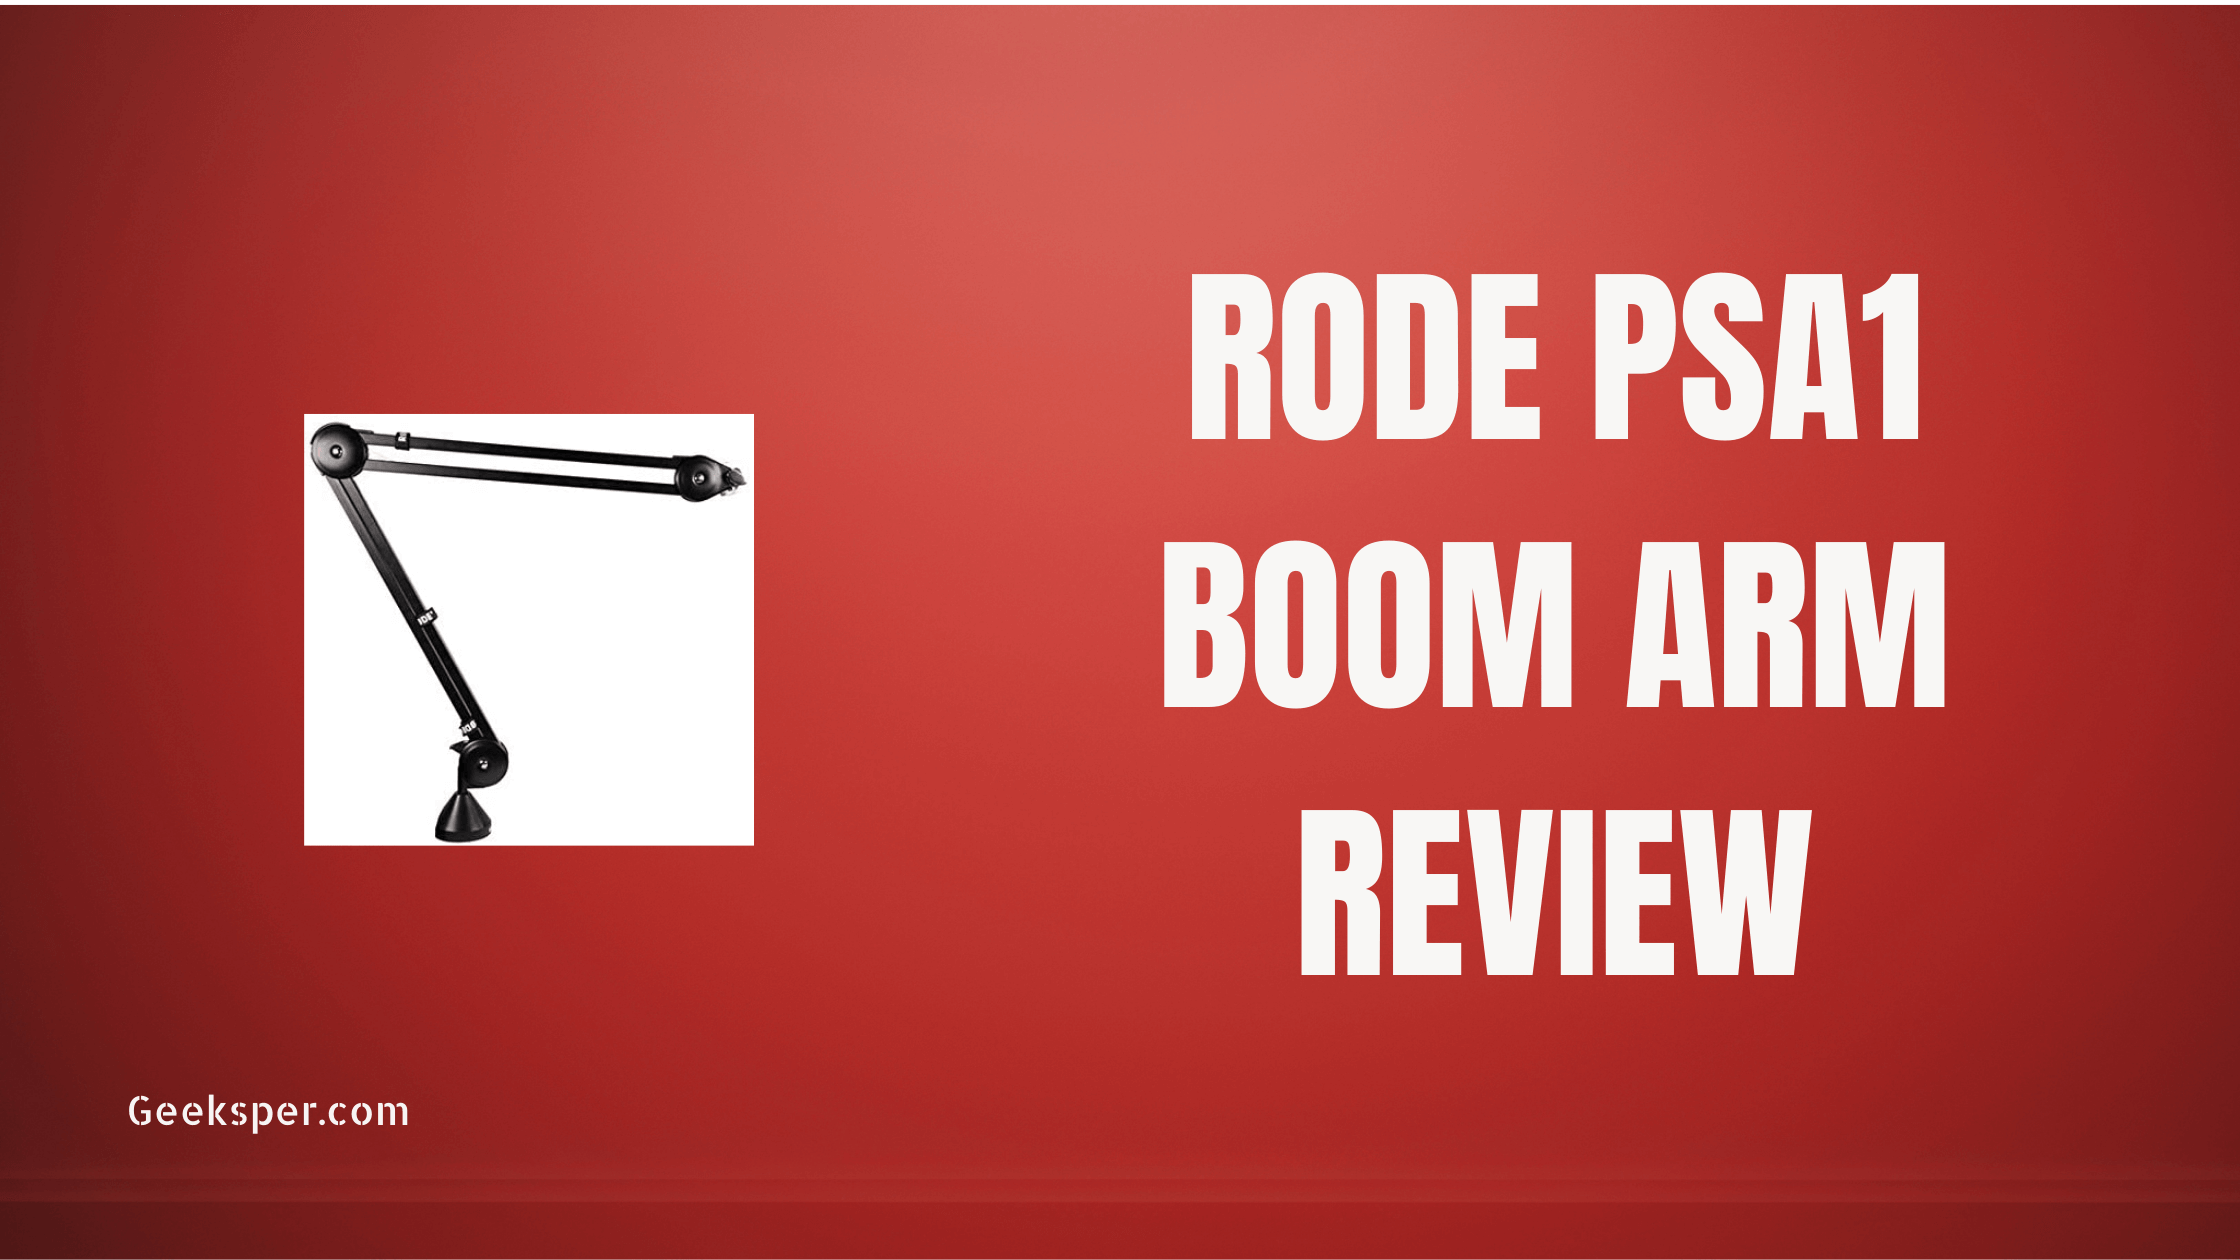 Rode PSA1 Boom Arm Review by Geeksper